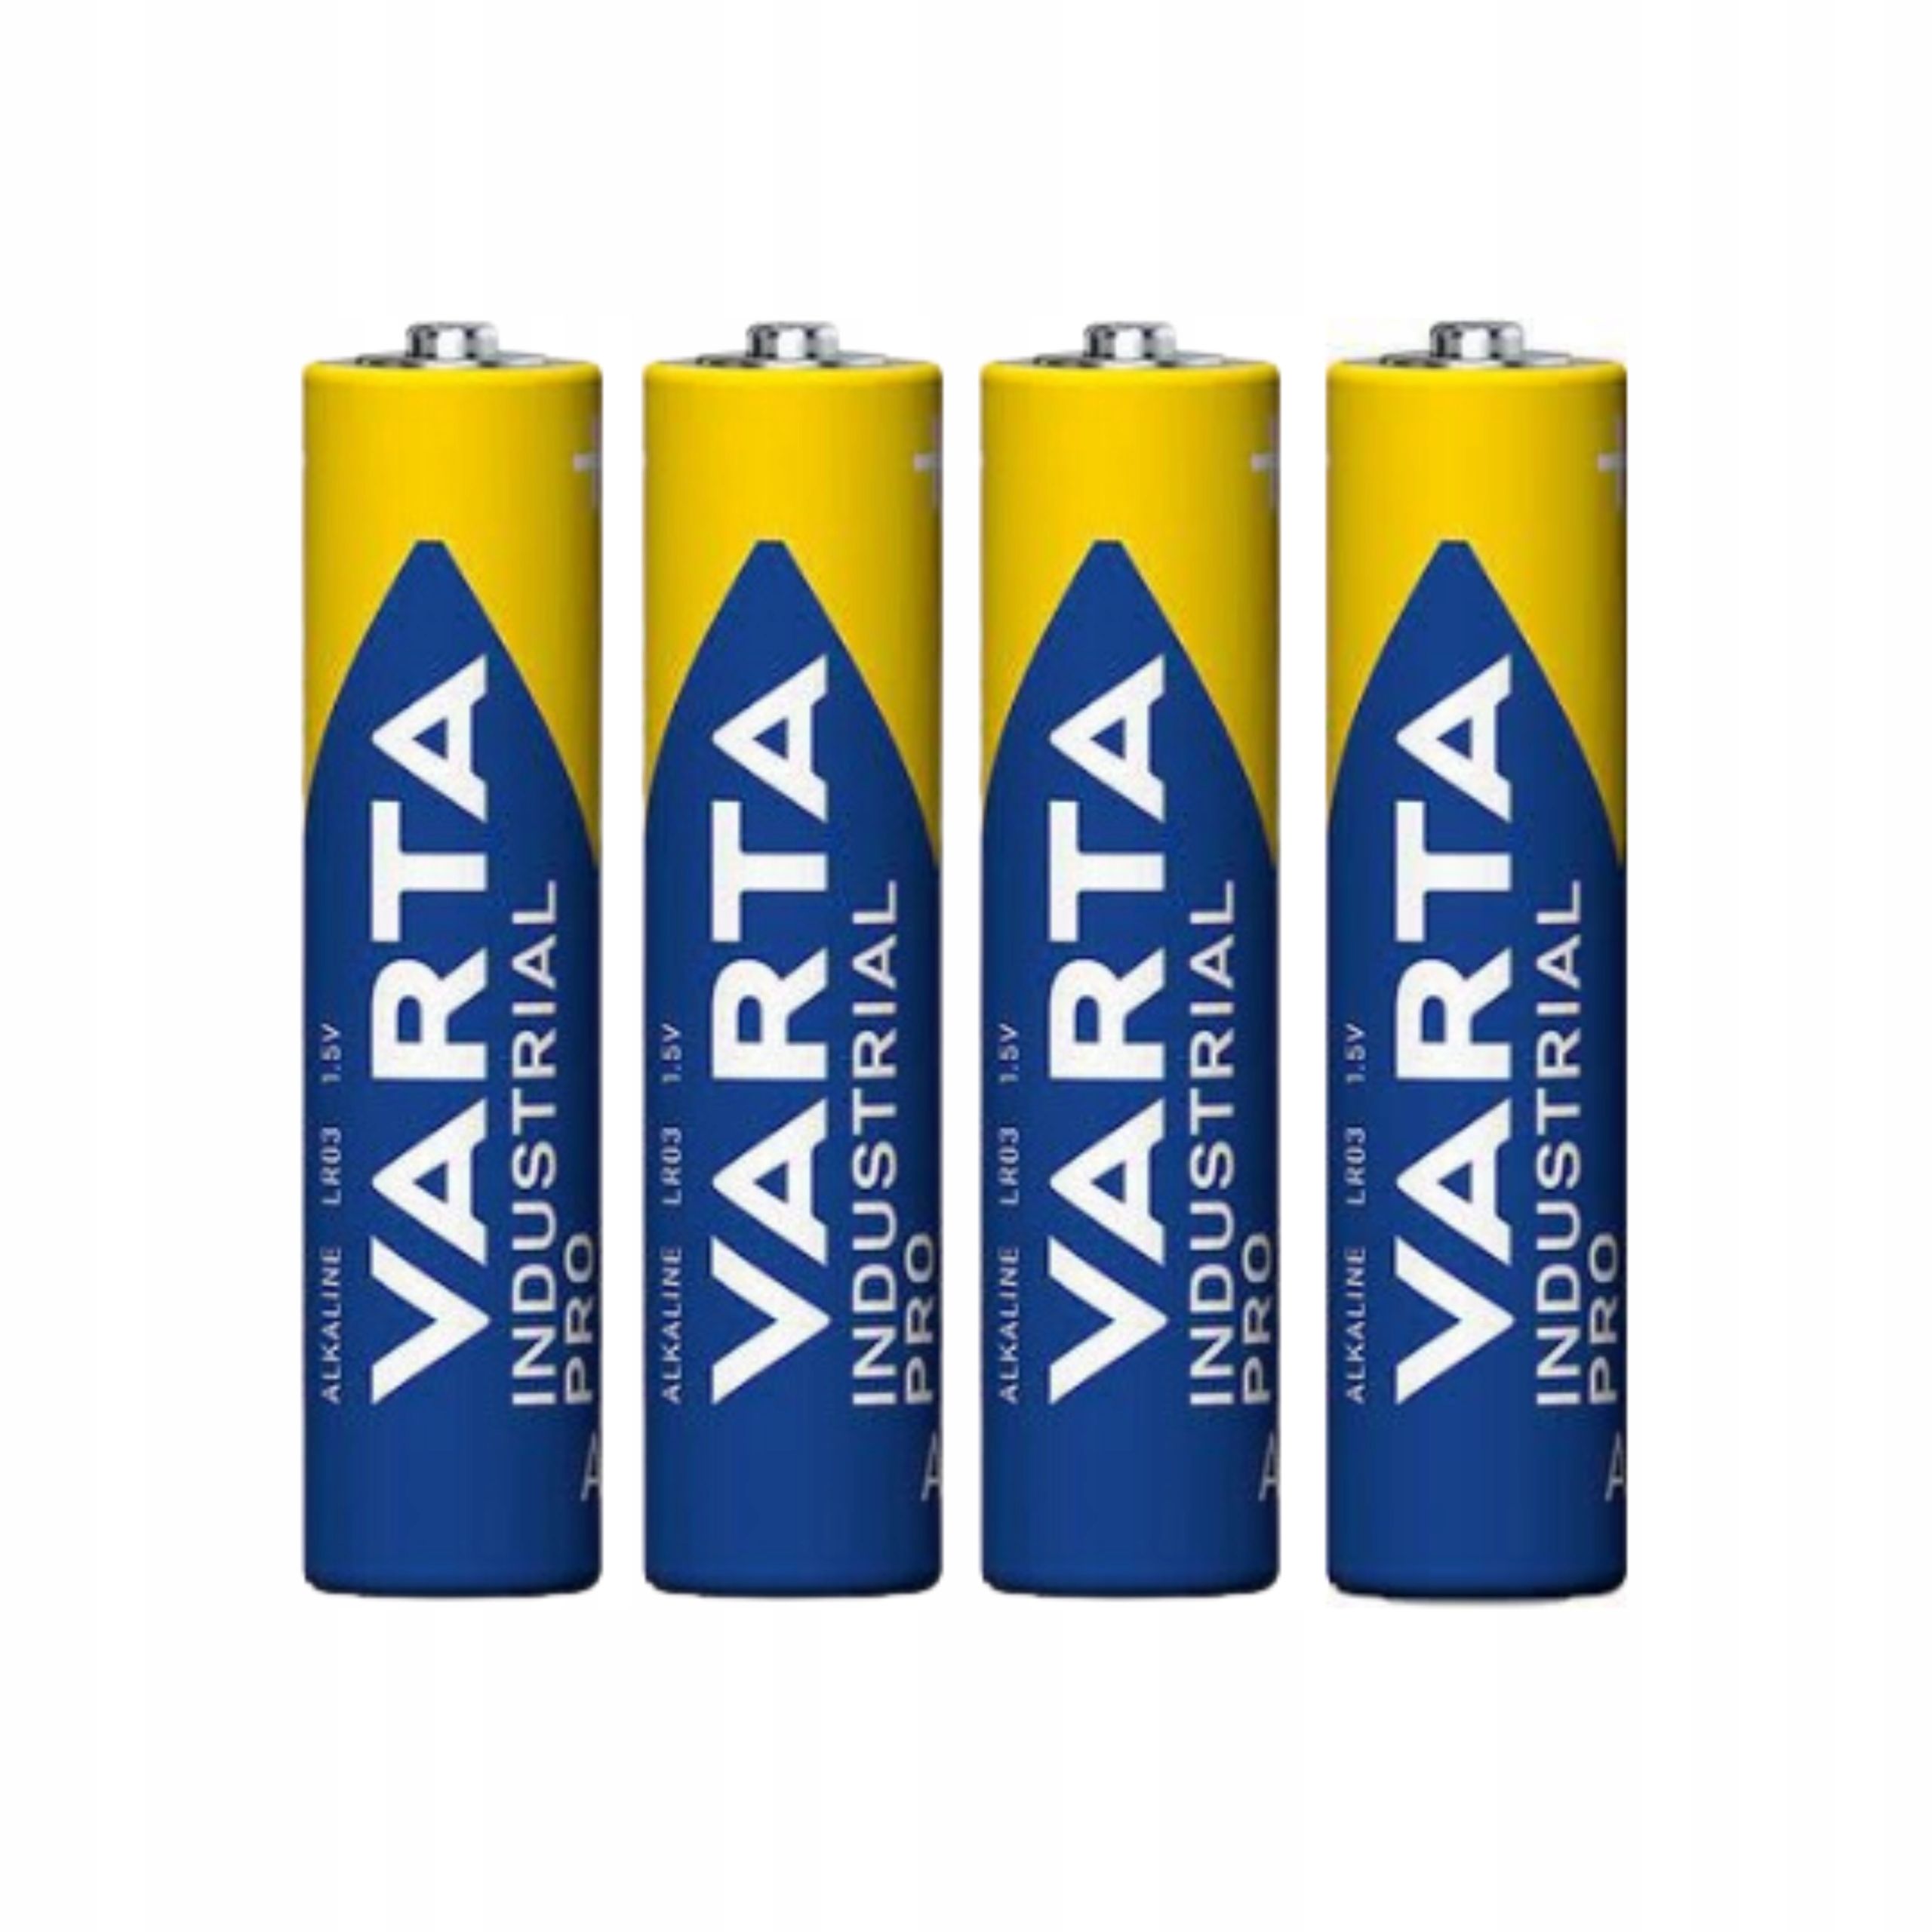 Zestaw Bateria Alkaliczna Varta Aaa Do Zabawek Industrial R3 1.5V